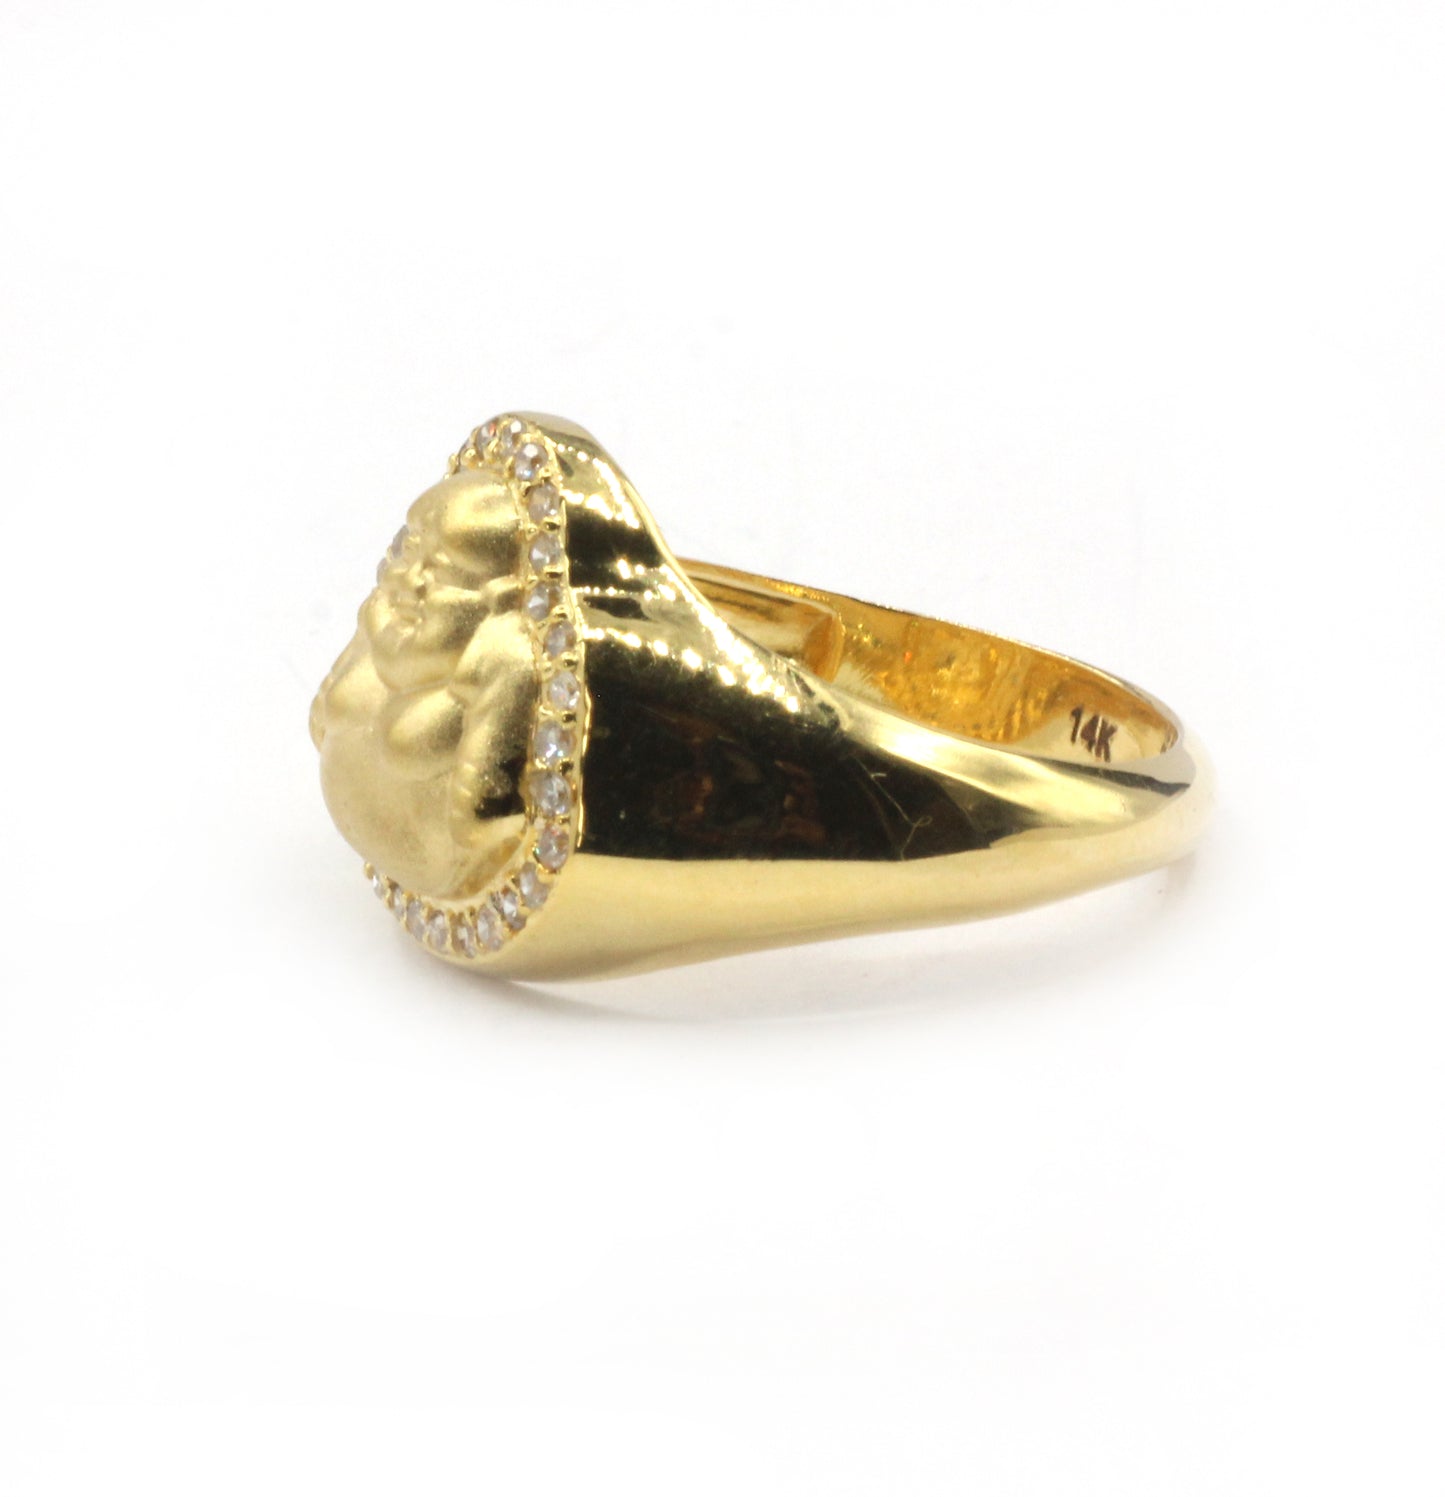 Laughing Buddha 14k Solid Gold Diamond Rings.Genuine handmade pave diamond Rings.